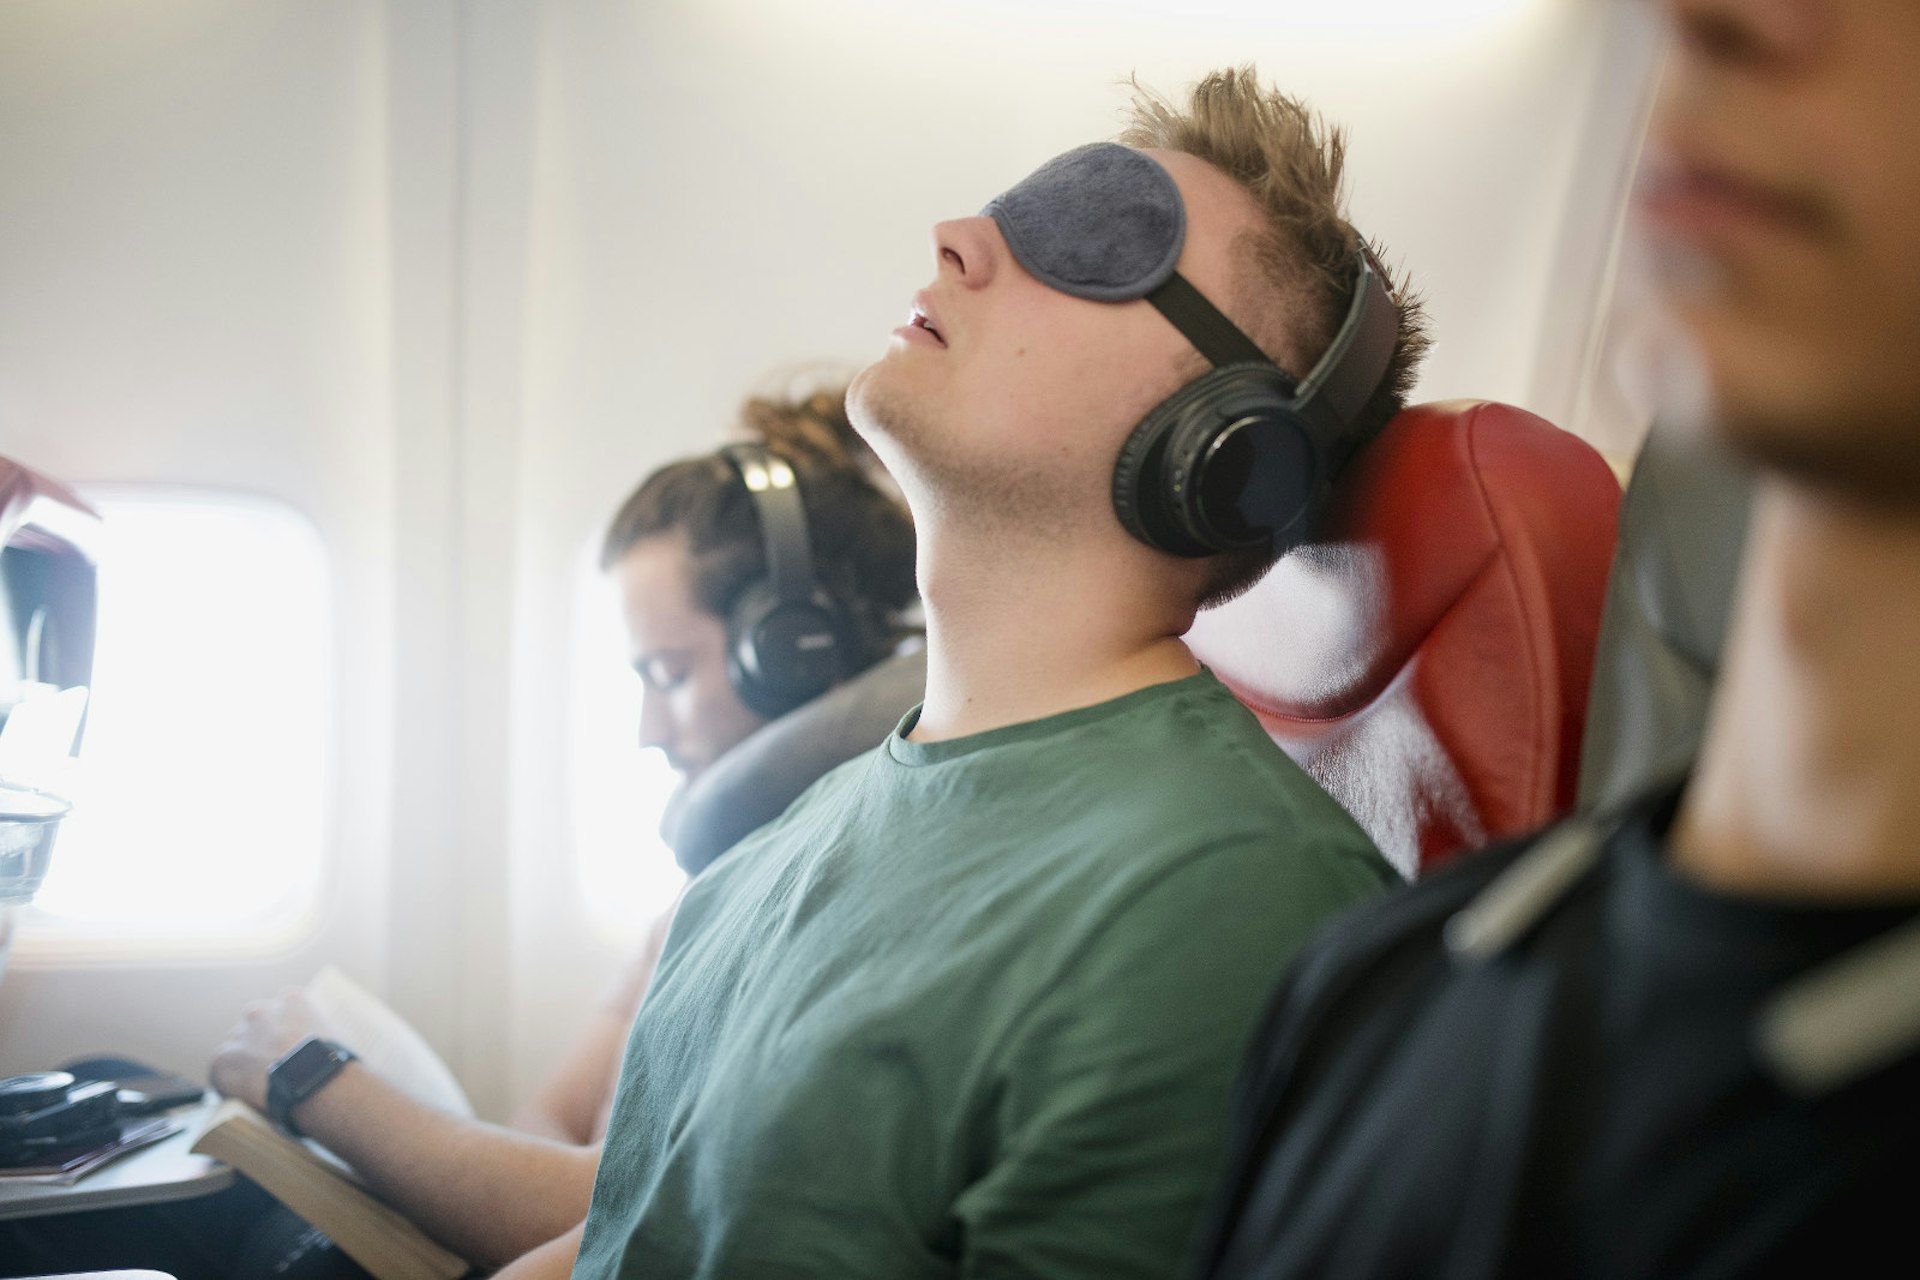 A young man tilts his head back on an airplane, asleep, weraing heaphones and an eyemask.